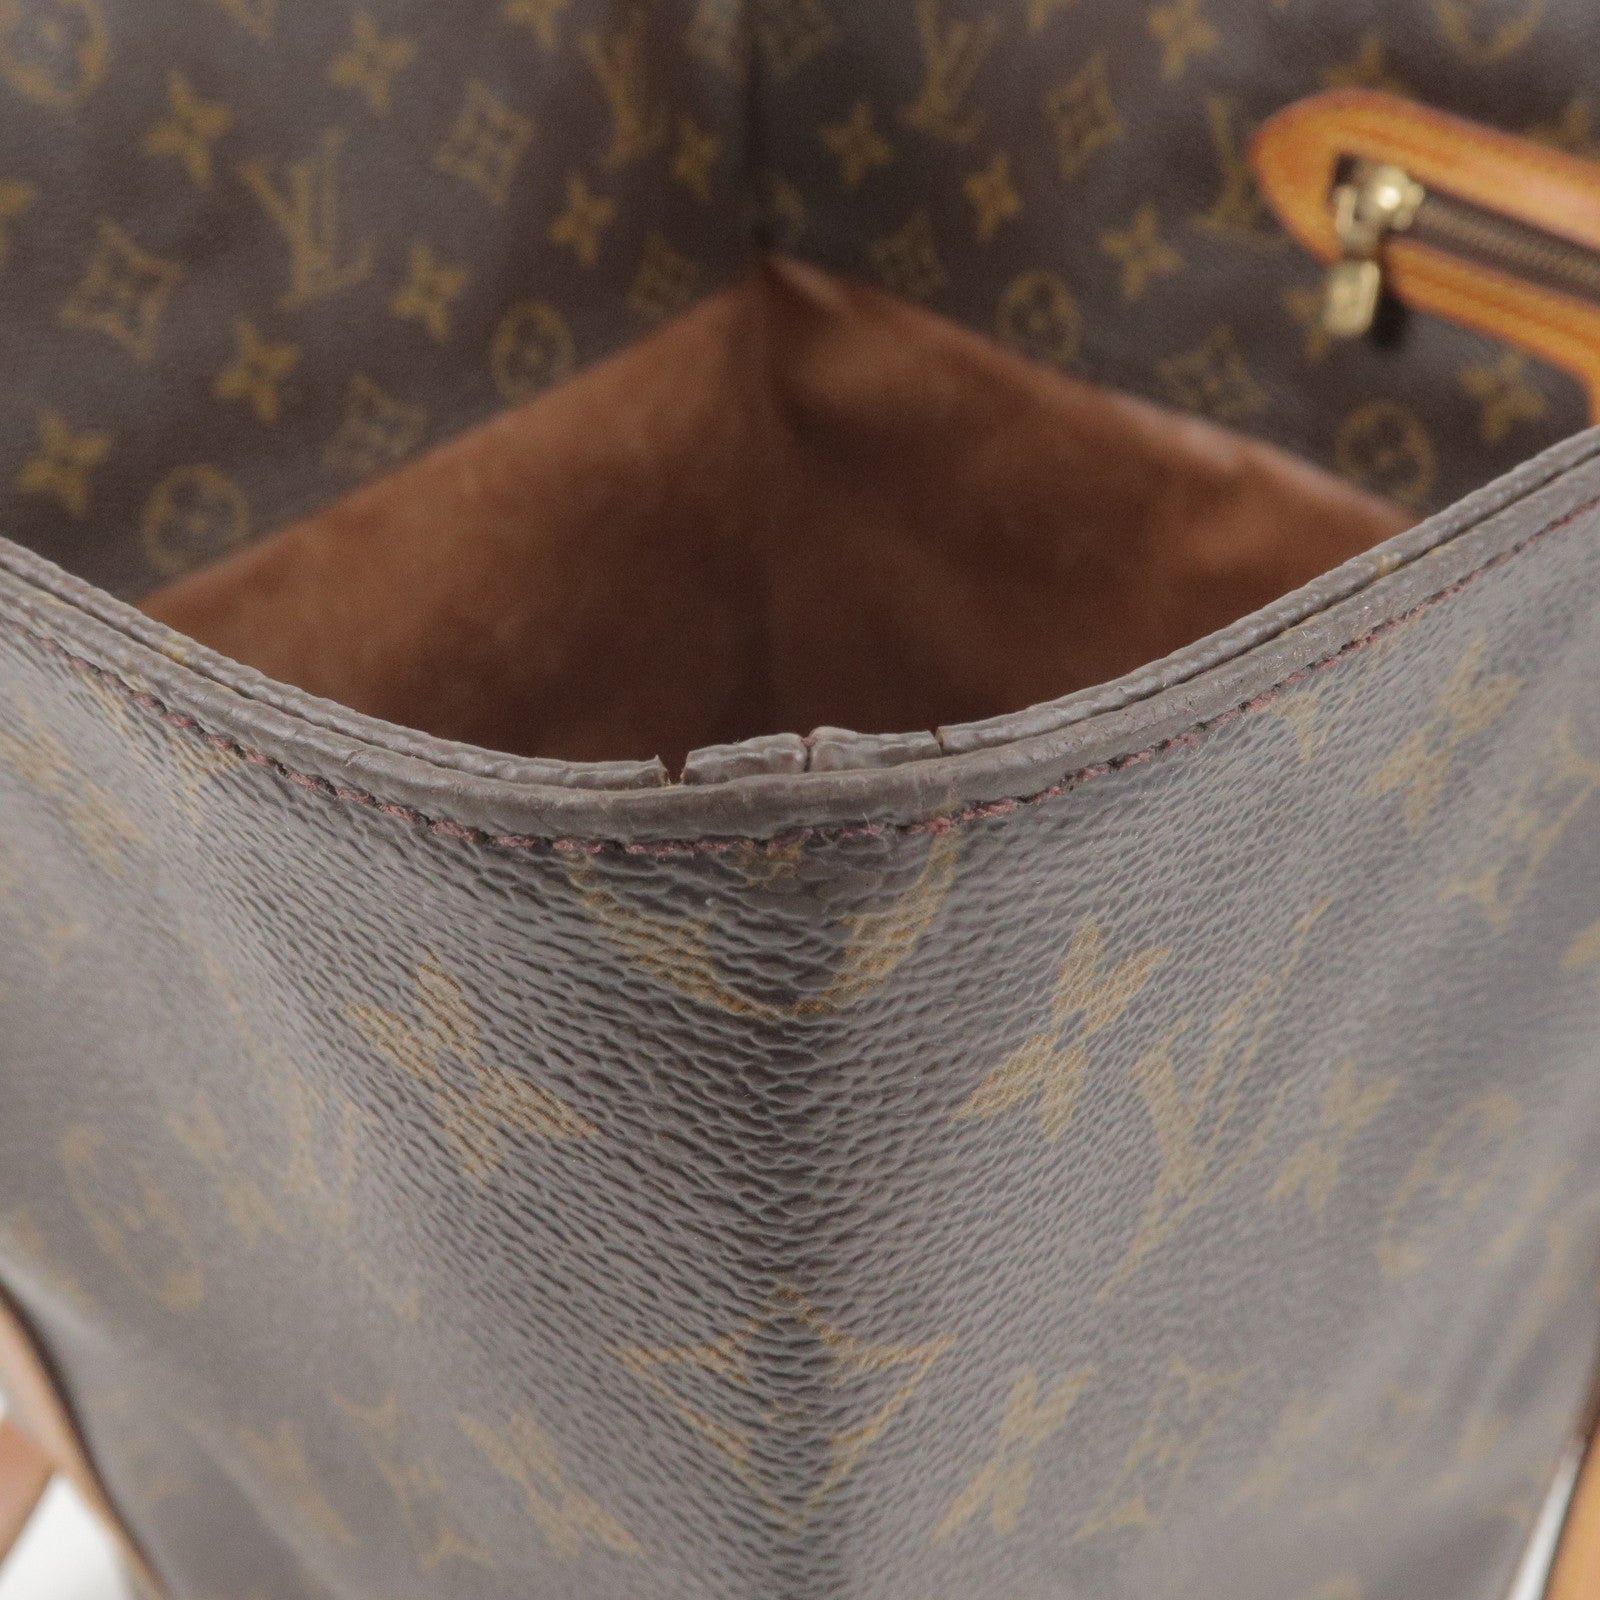 Louis Vuitton Sac Plat Handbag in Ebene Damier Canvas